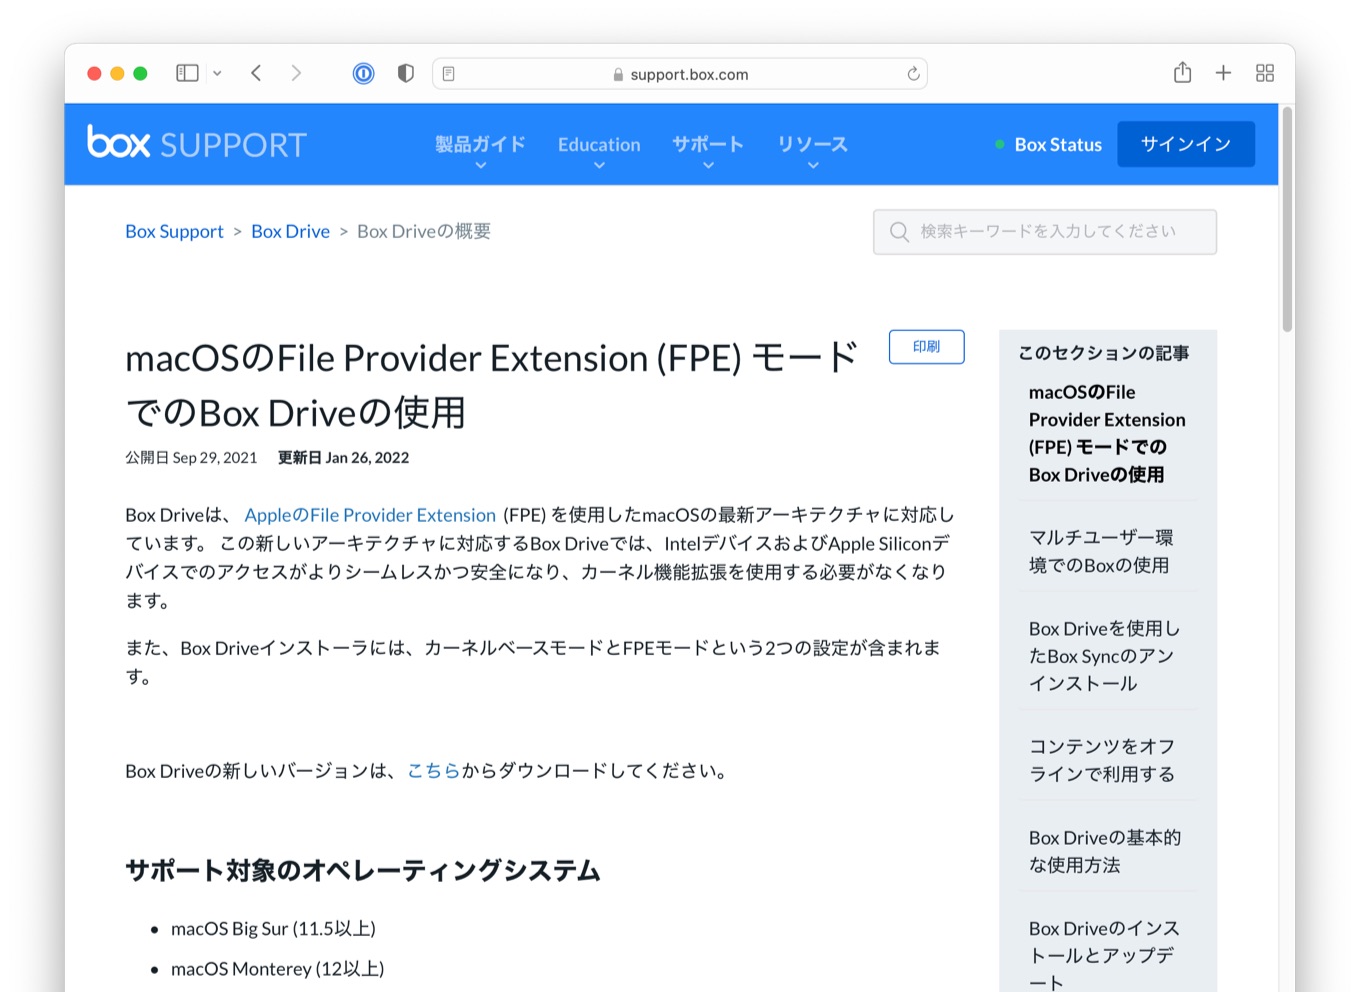 macOSのFile Provider Extension (FPE) モードでのBox Driveの使用